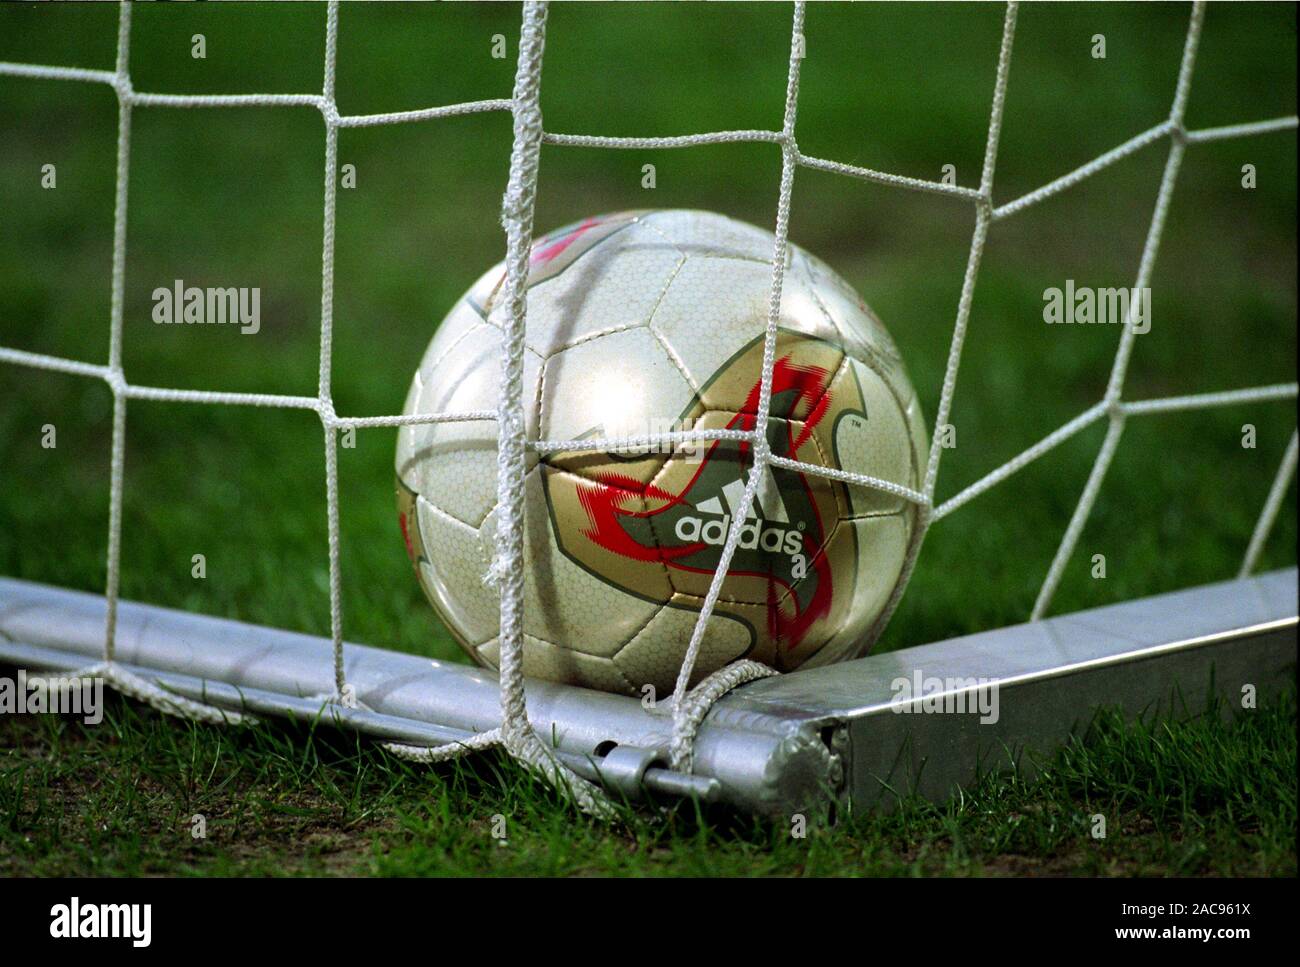 The fevernova adidas ball hi-res stock photography and images - Alamy